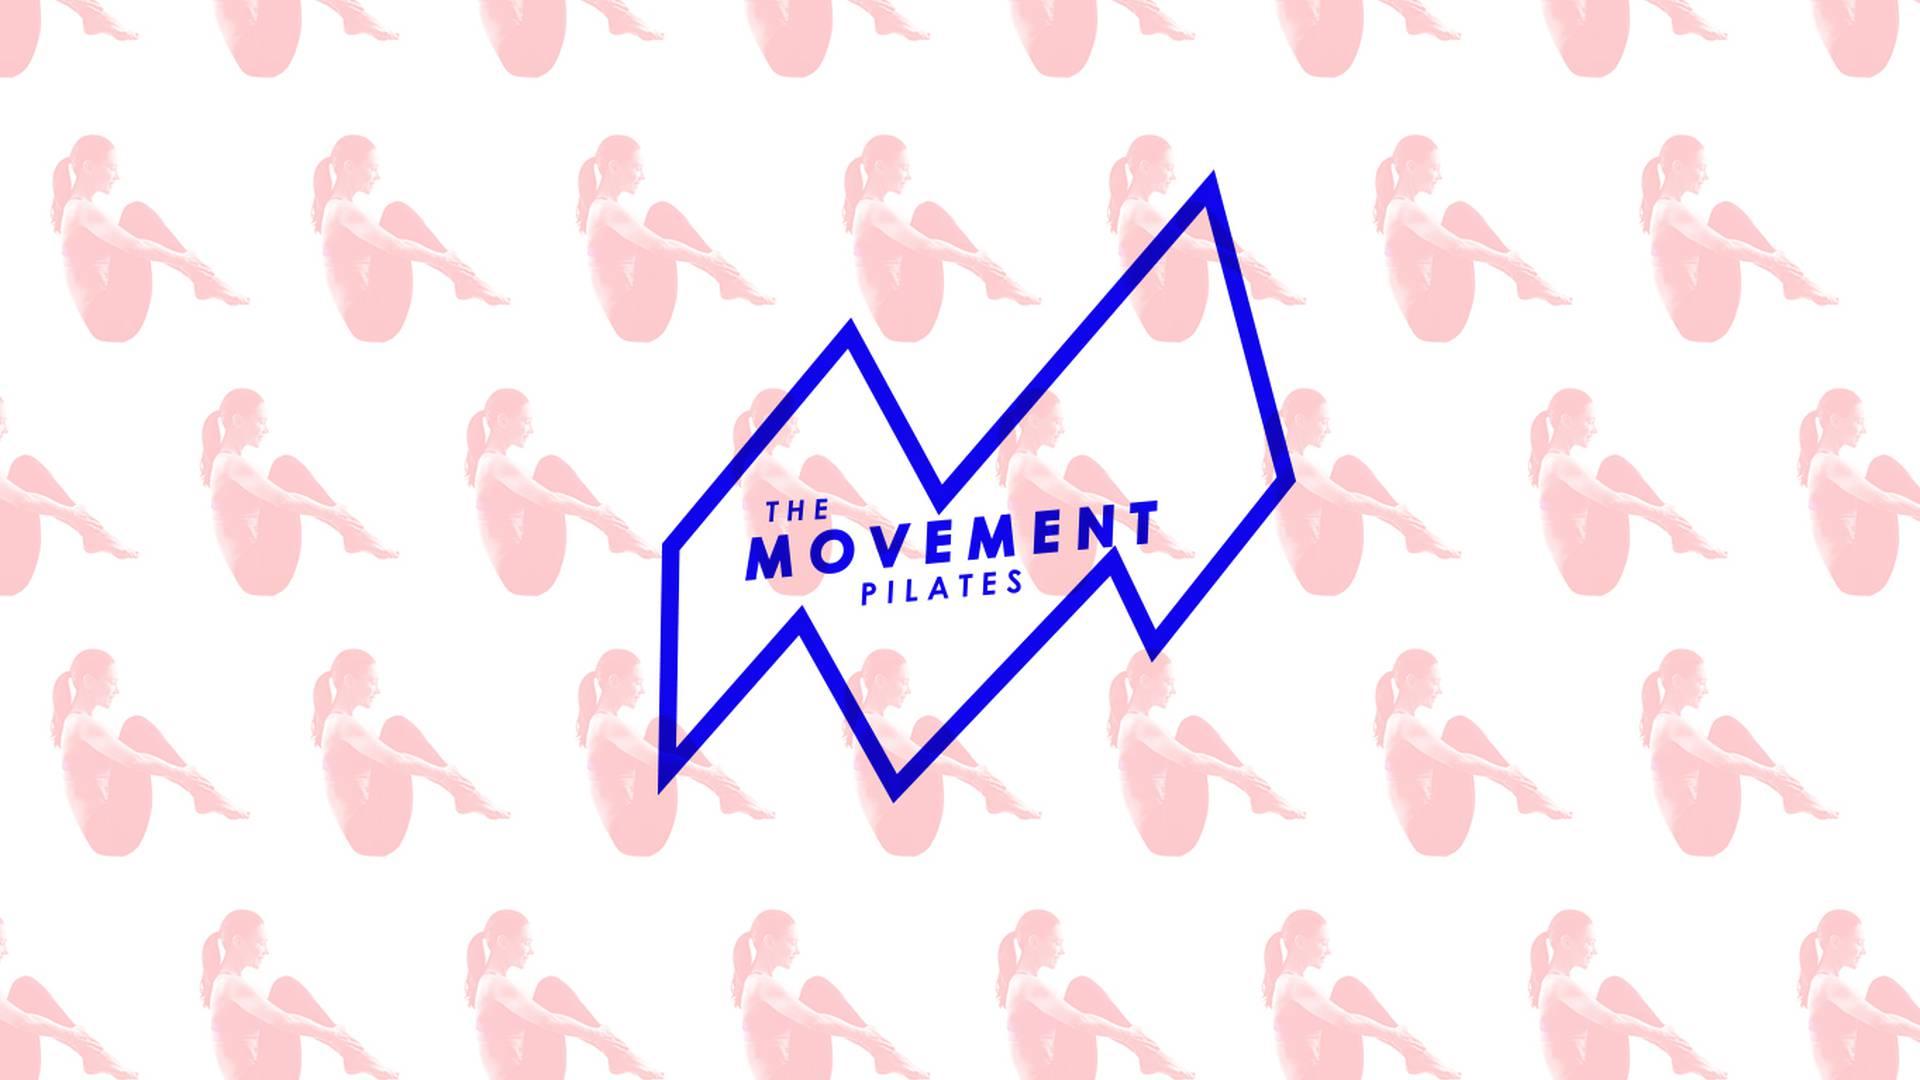 The Movement Pilates photo